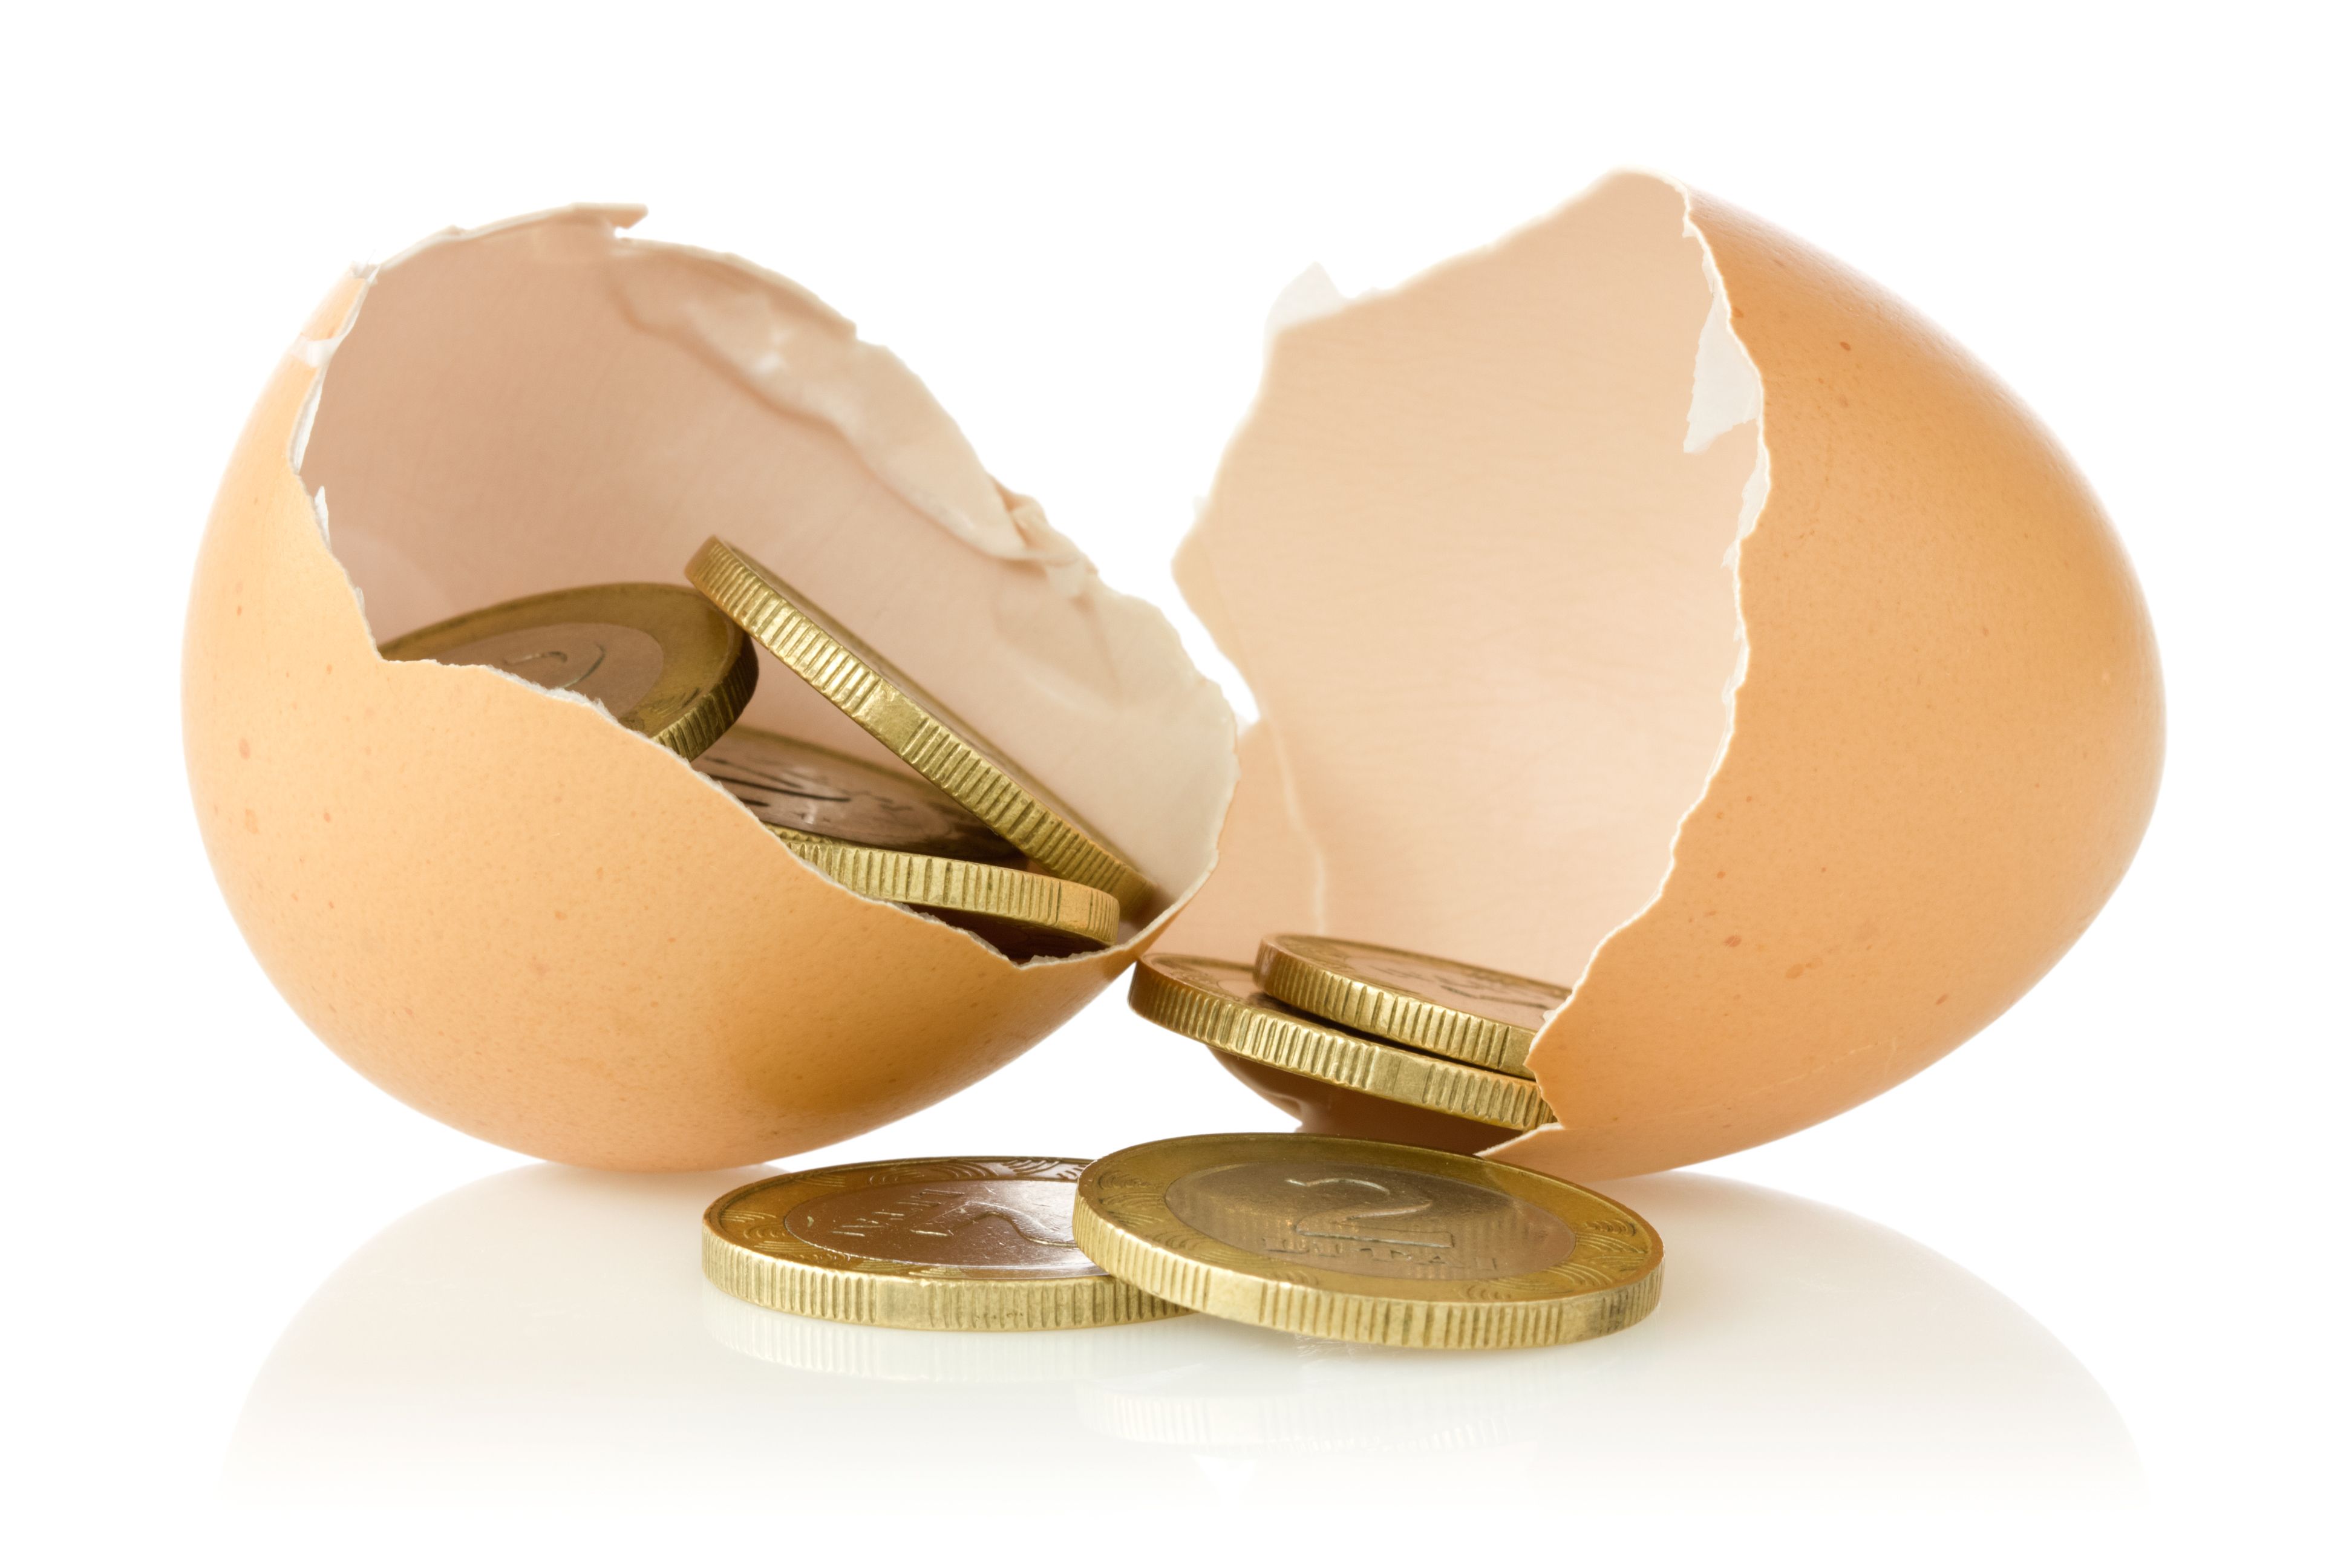 An egg broken open to reveal coins